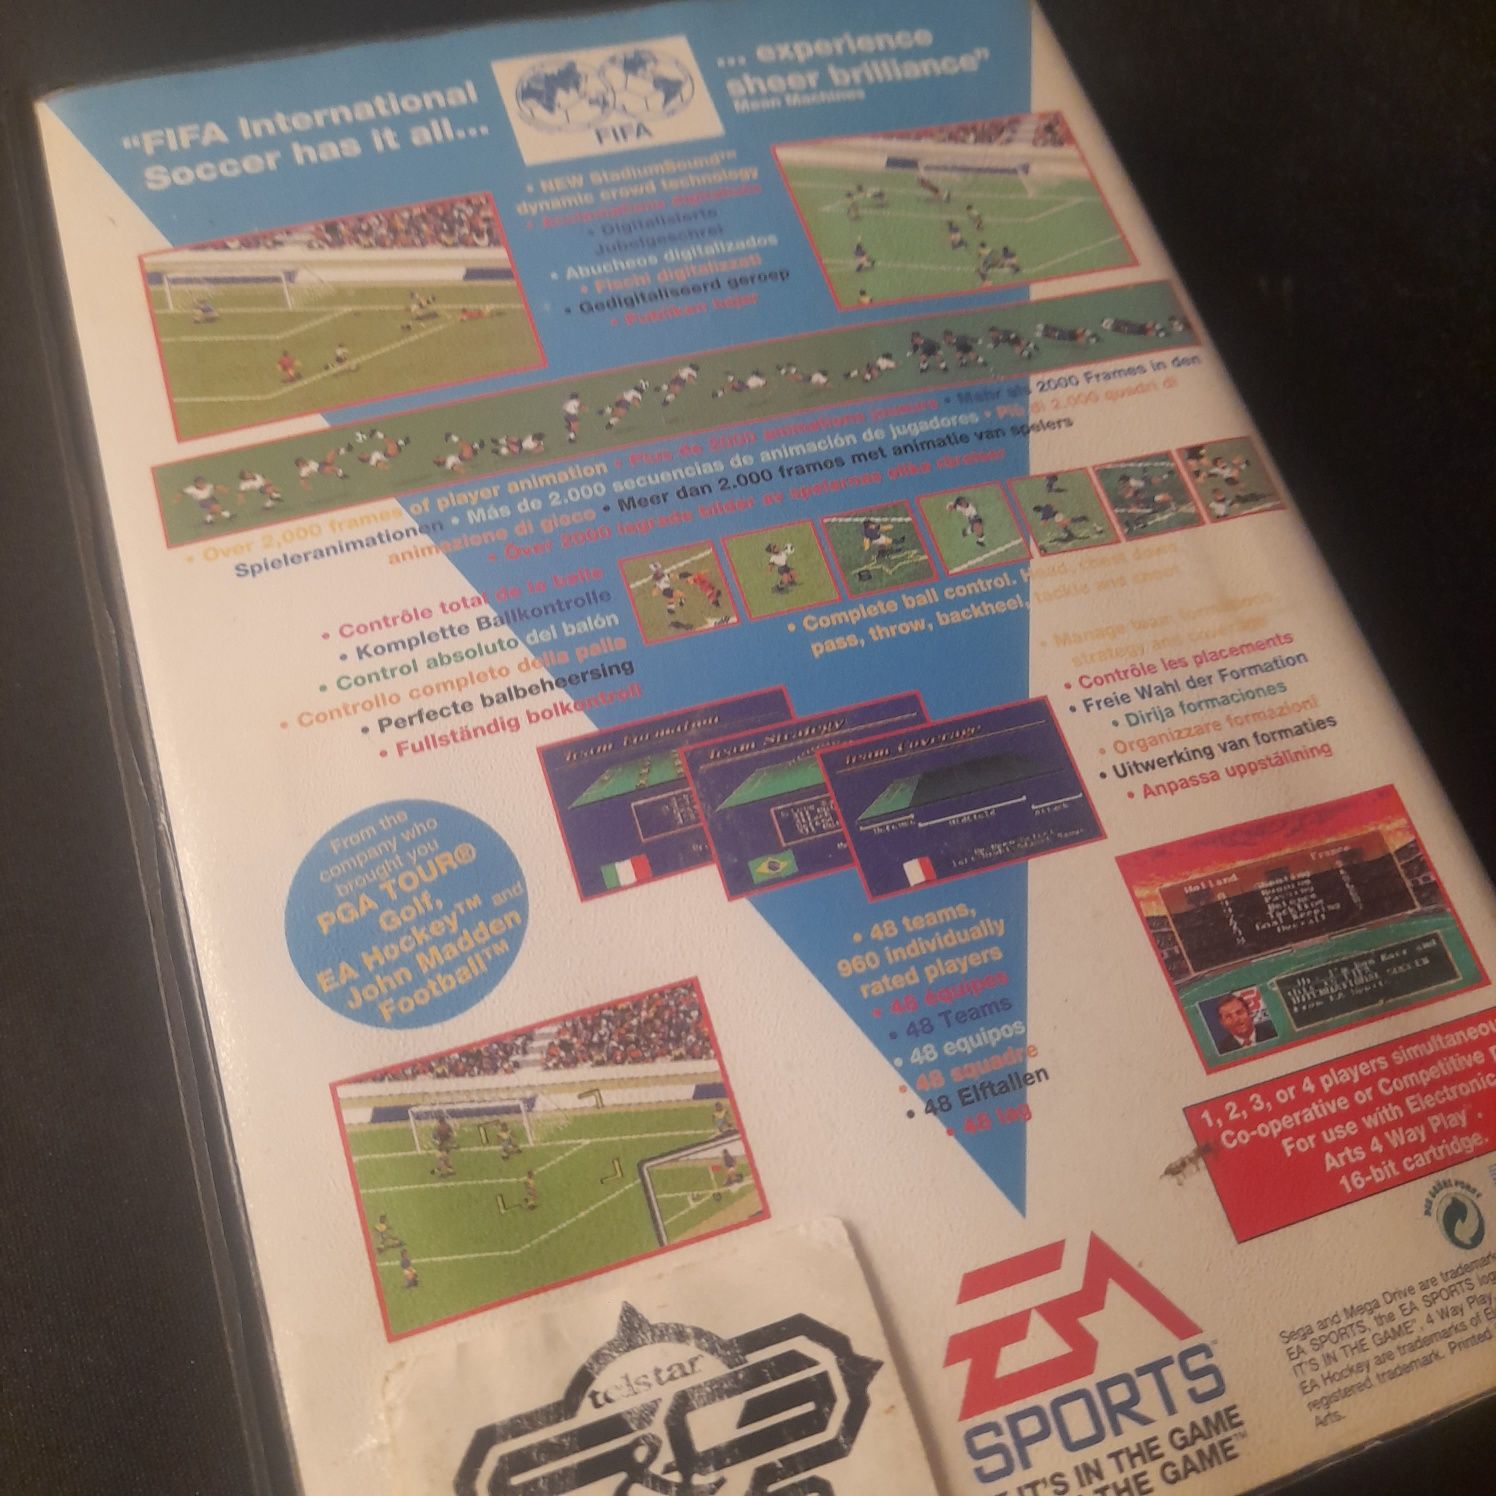 FIFA International soccer  Sega Mega Drive